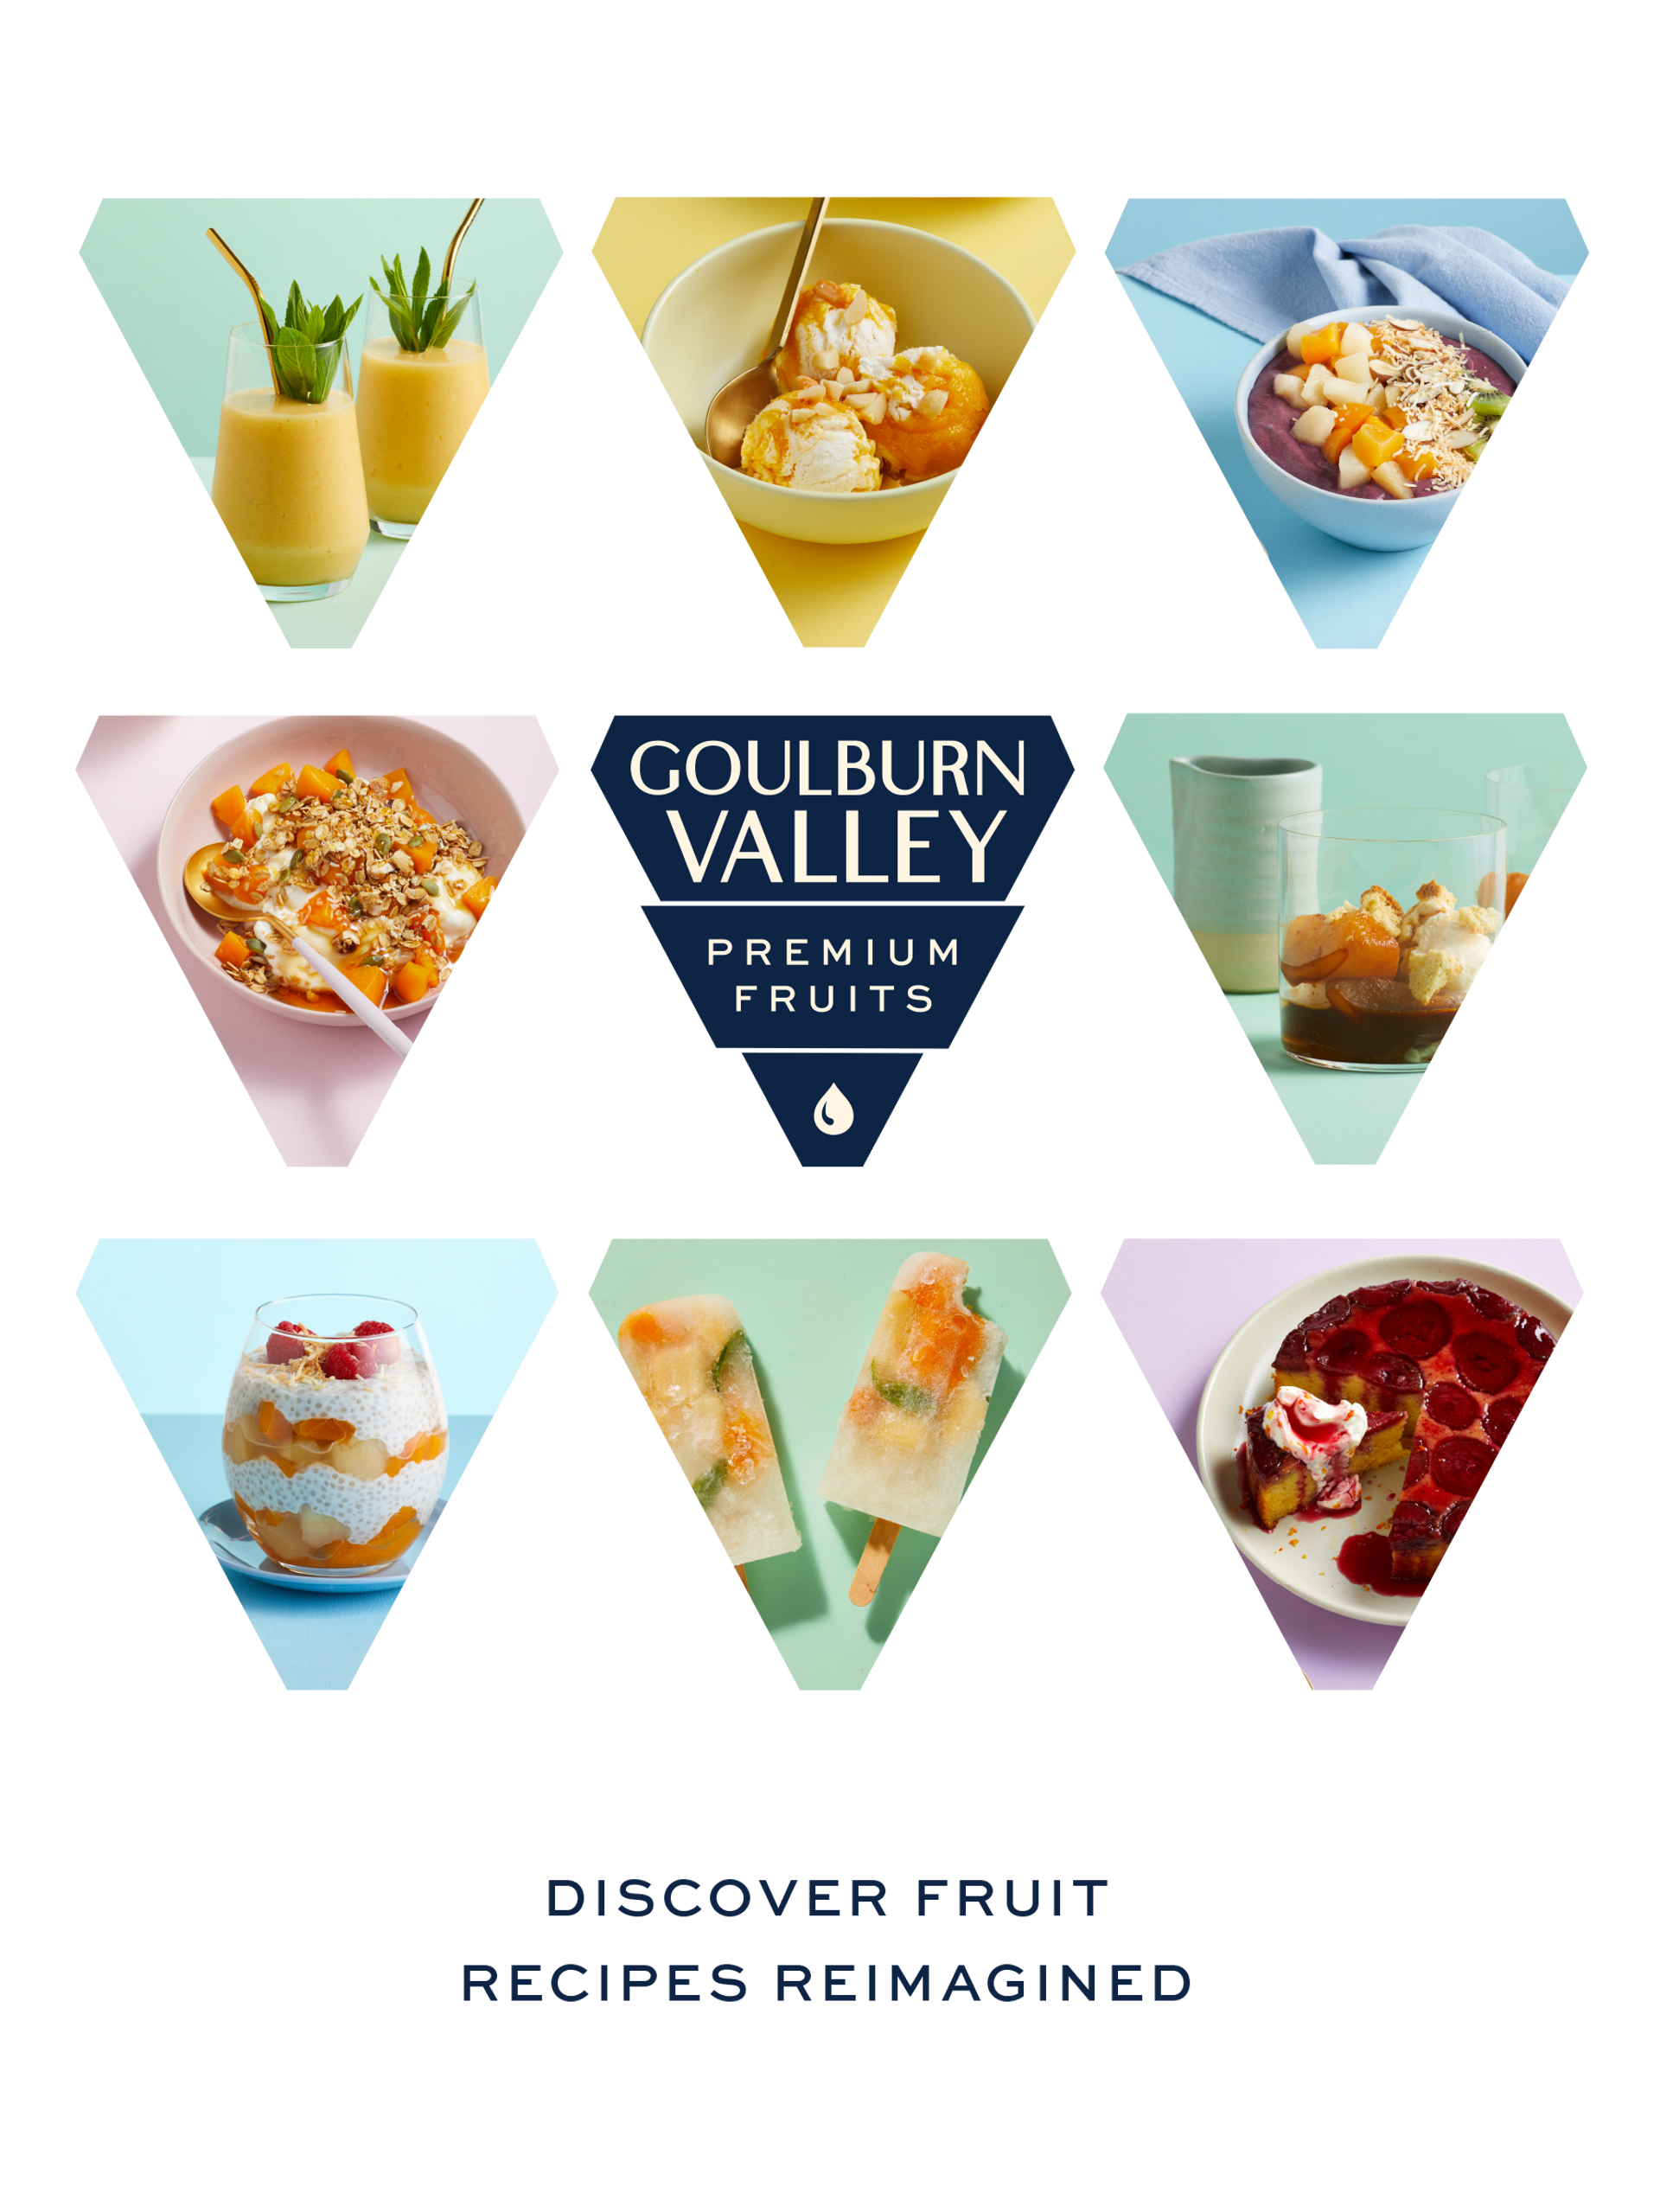 Goulburn Valley recipes for fruit reimagined